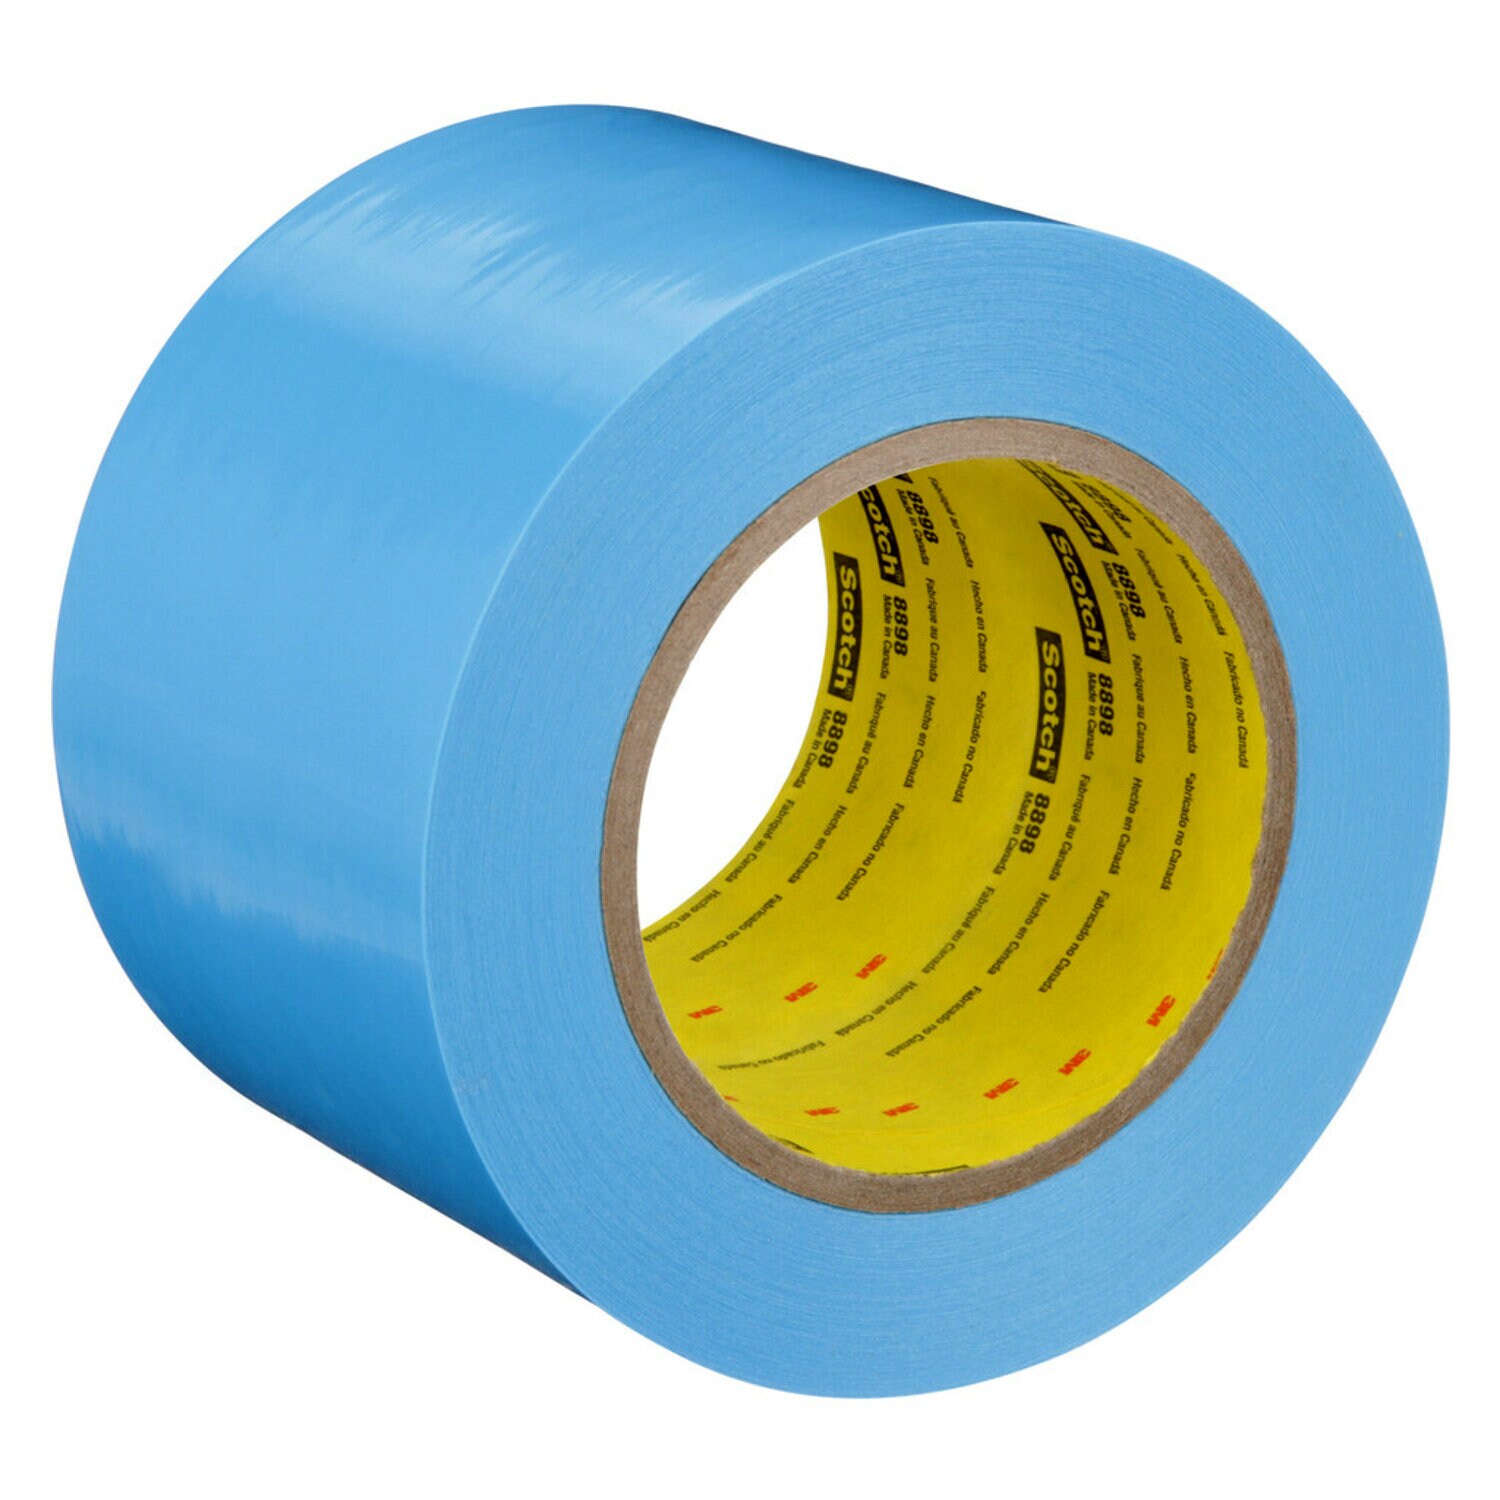 7000048853 - Scotch Strapping Tape 8898, Blue, 96 mm x 55 m, 4.6 mil, 12 rolls per
case